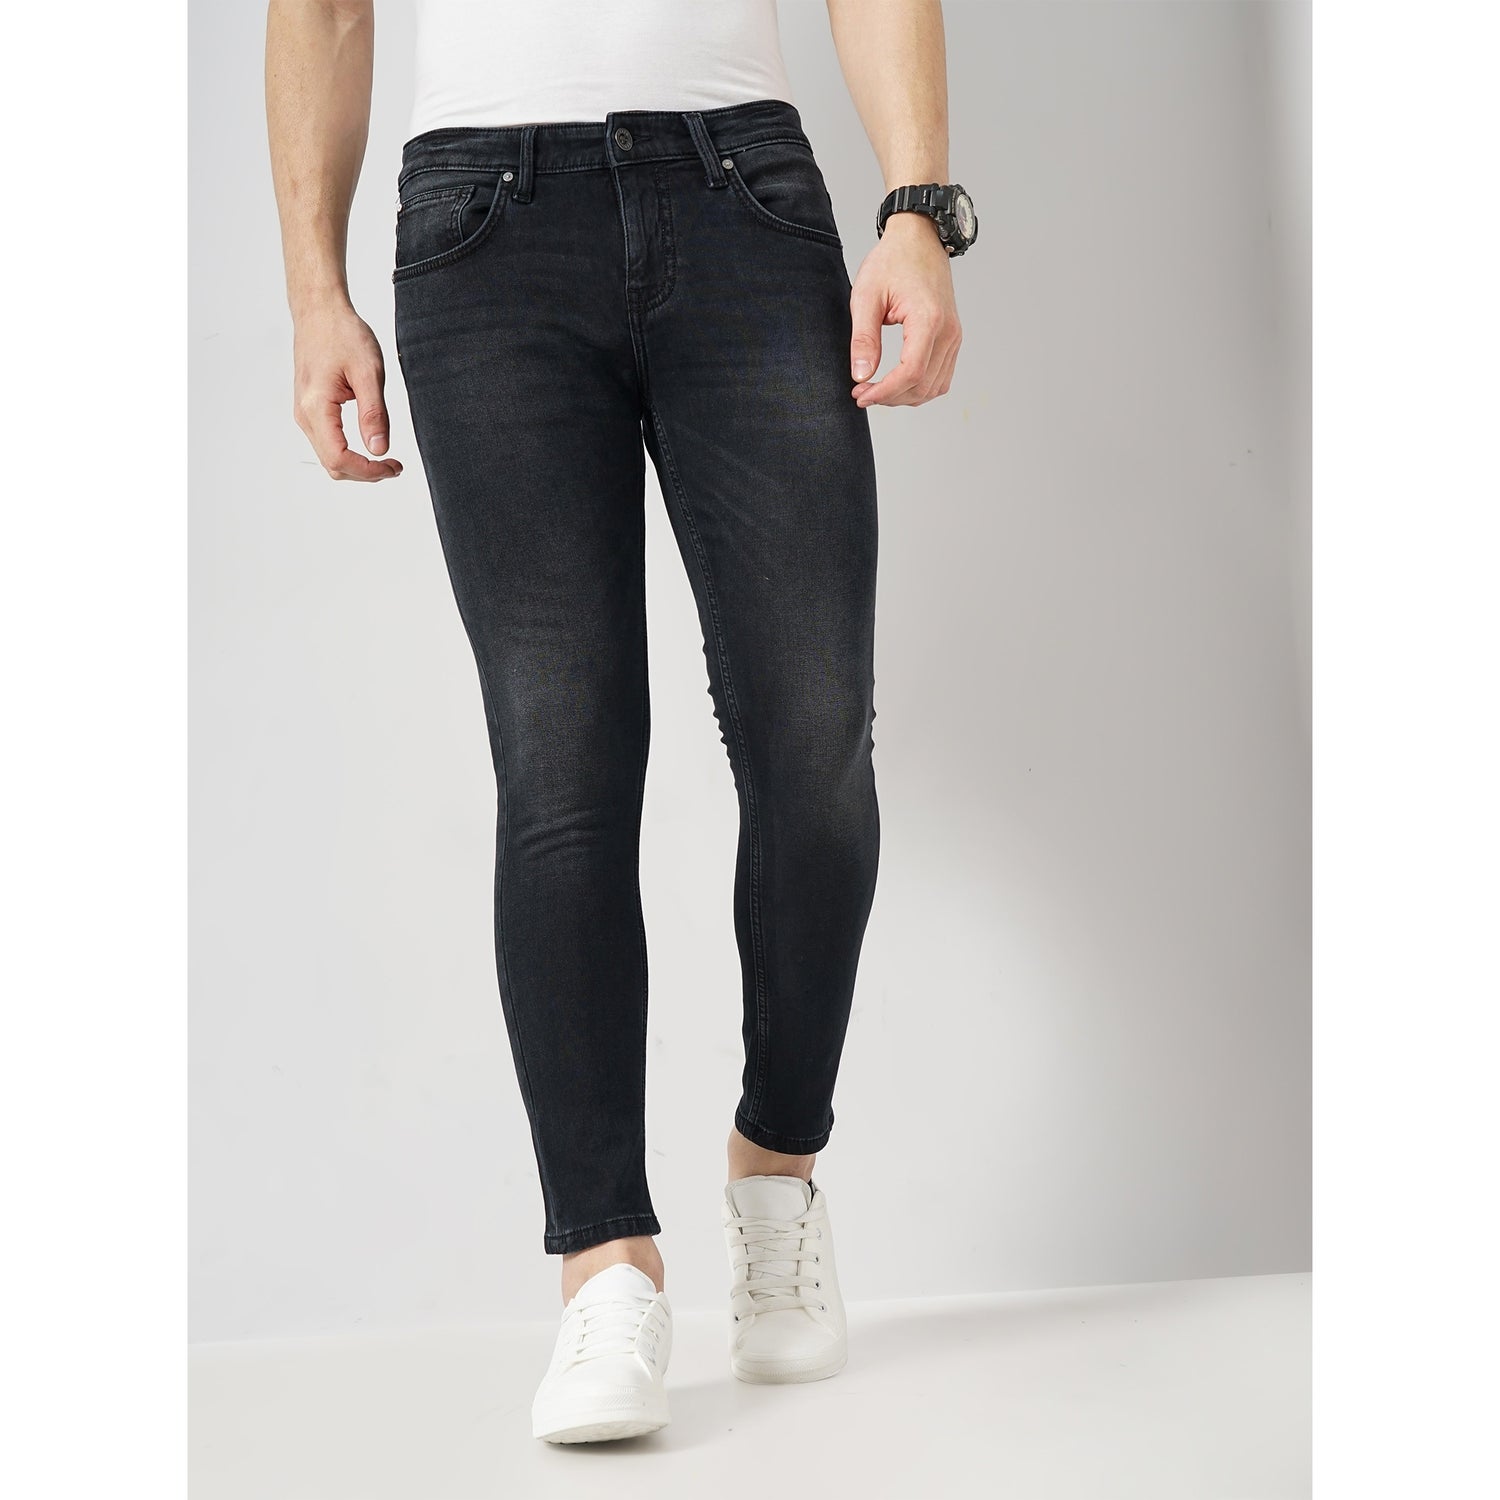 Black Cotton Ankle Length Jeans (FOANKLE6